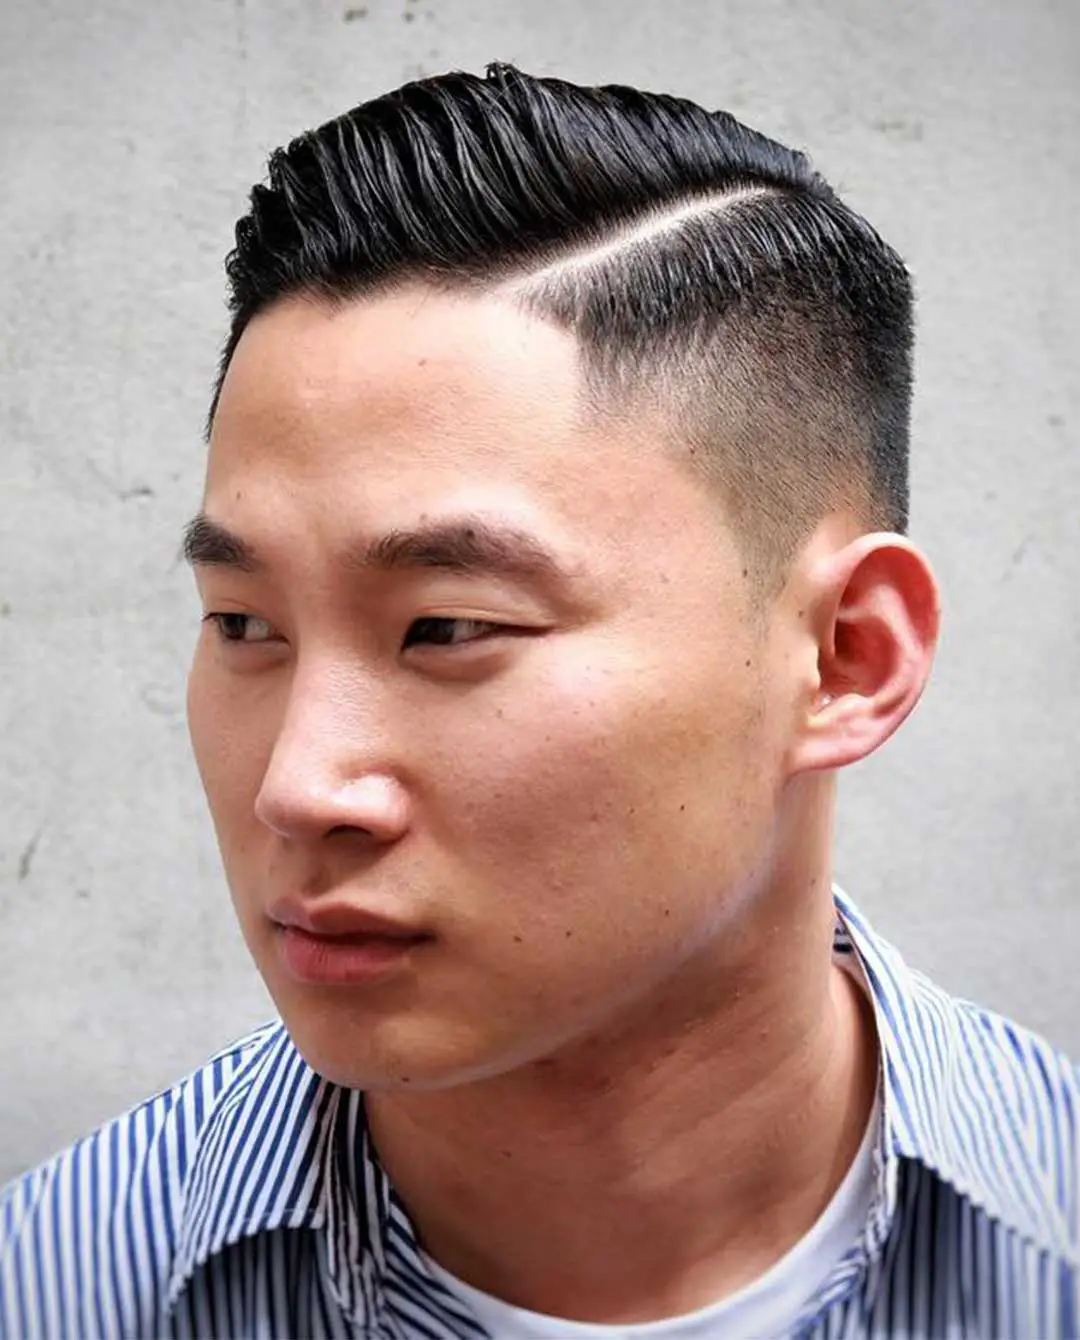 20+ Best Korean Men Haircut & Hairstyle Ideas - Men's Hairstyle Tips